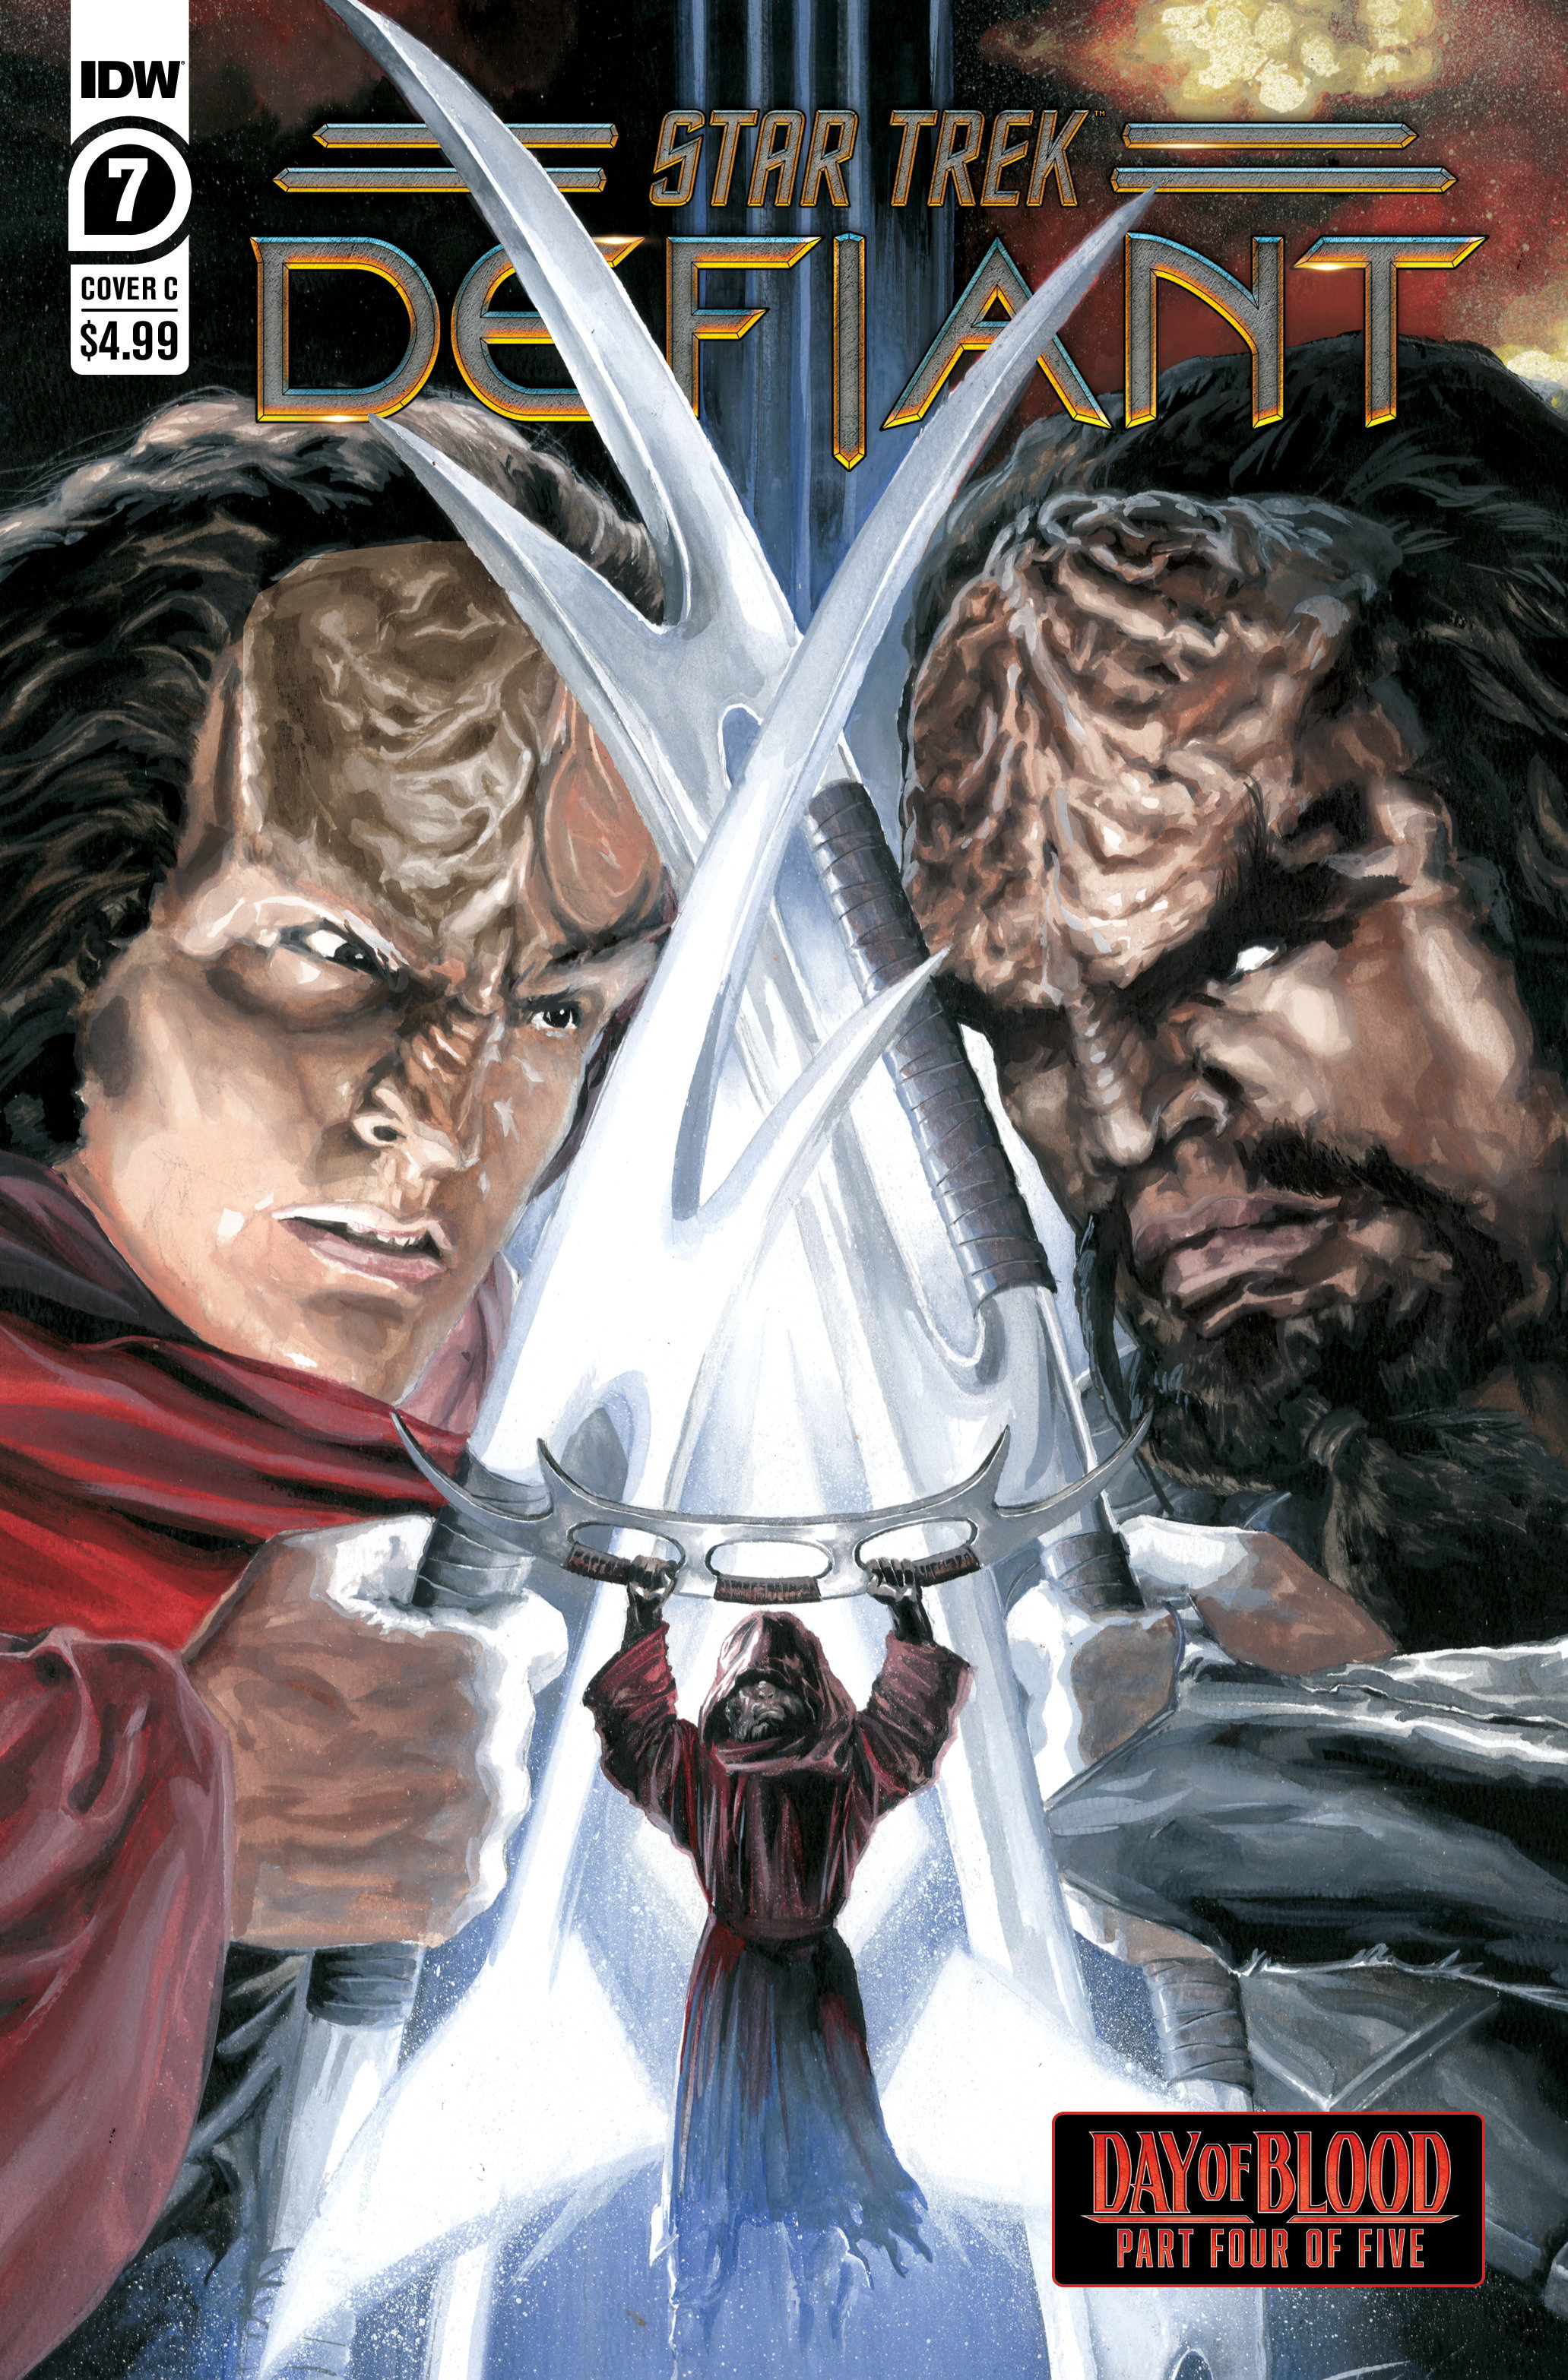 Star Trek: Defiant #7 Cover C Woodward